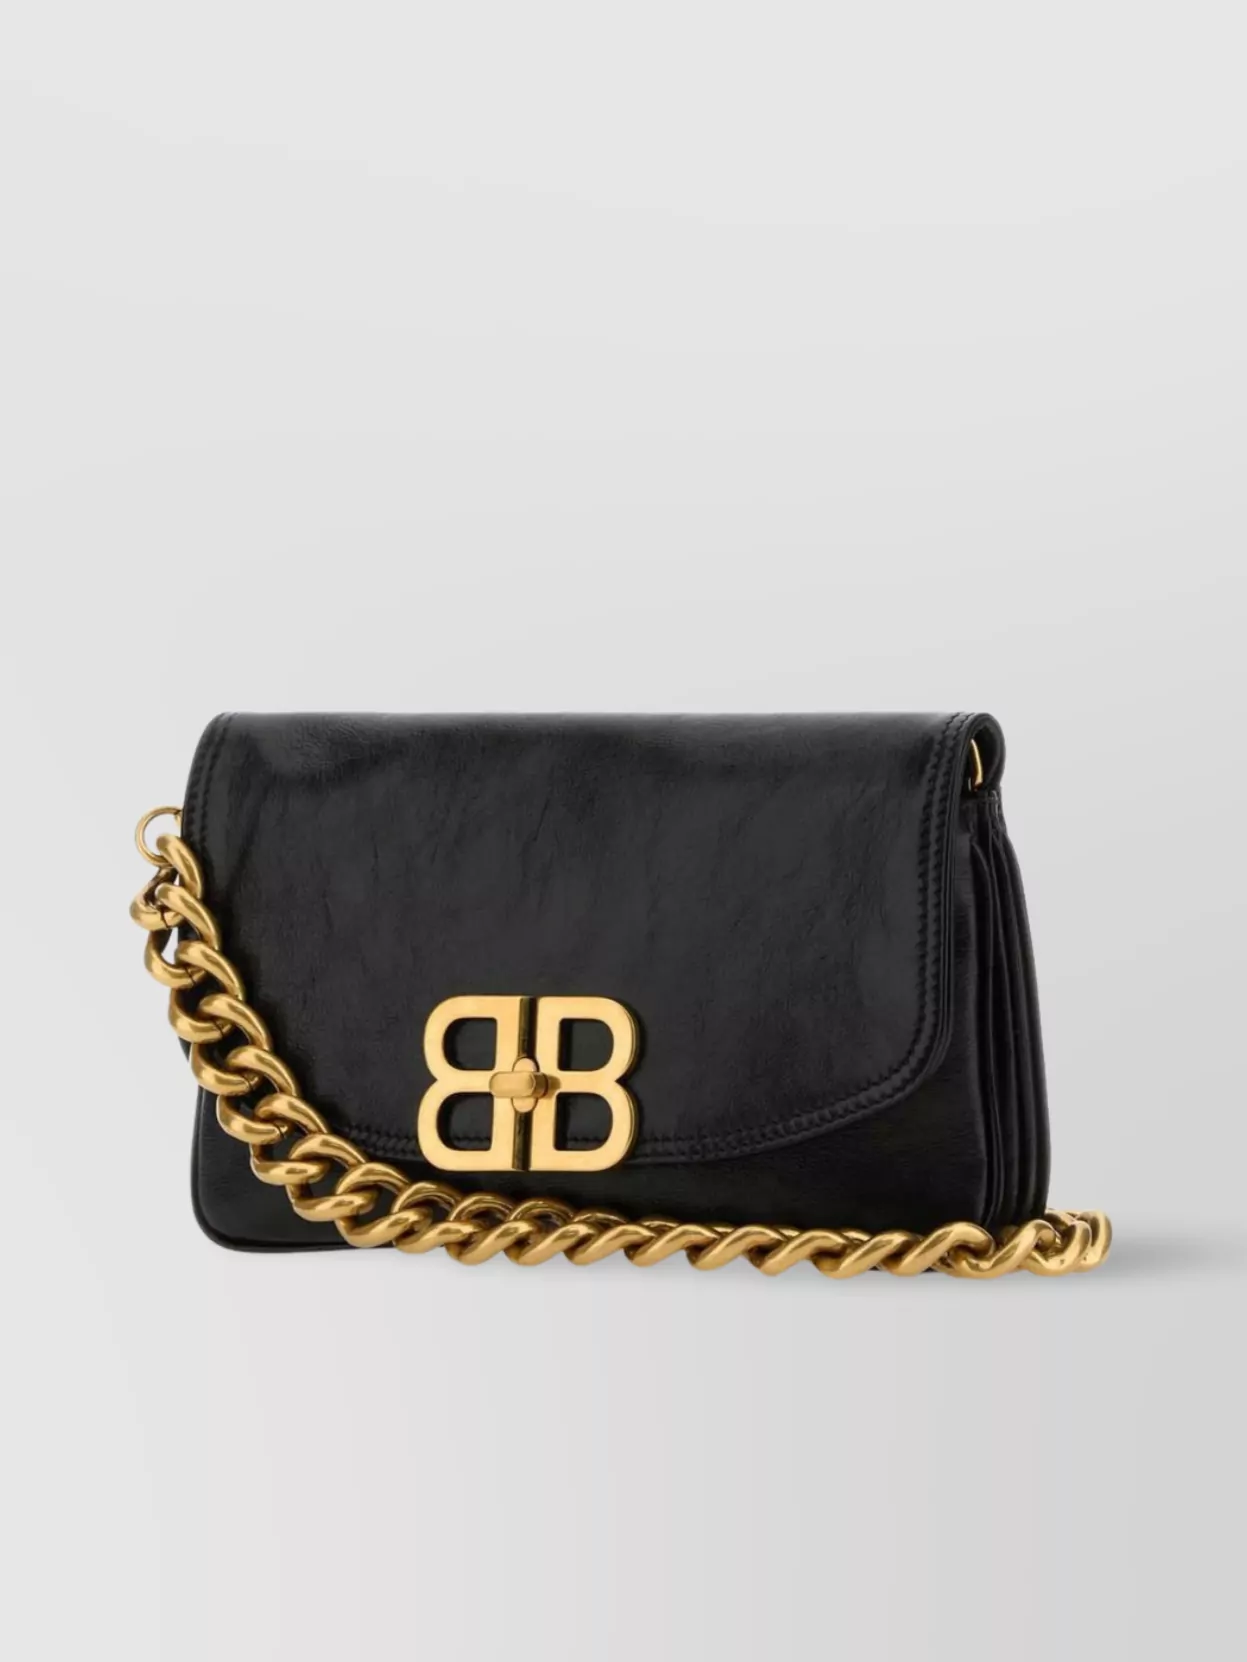 Balenciaga Leather Shoulder Bag Chain Strap In Black